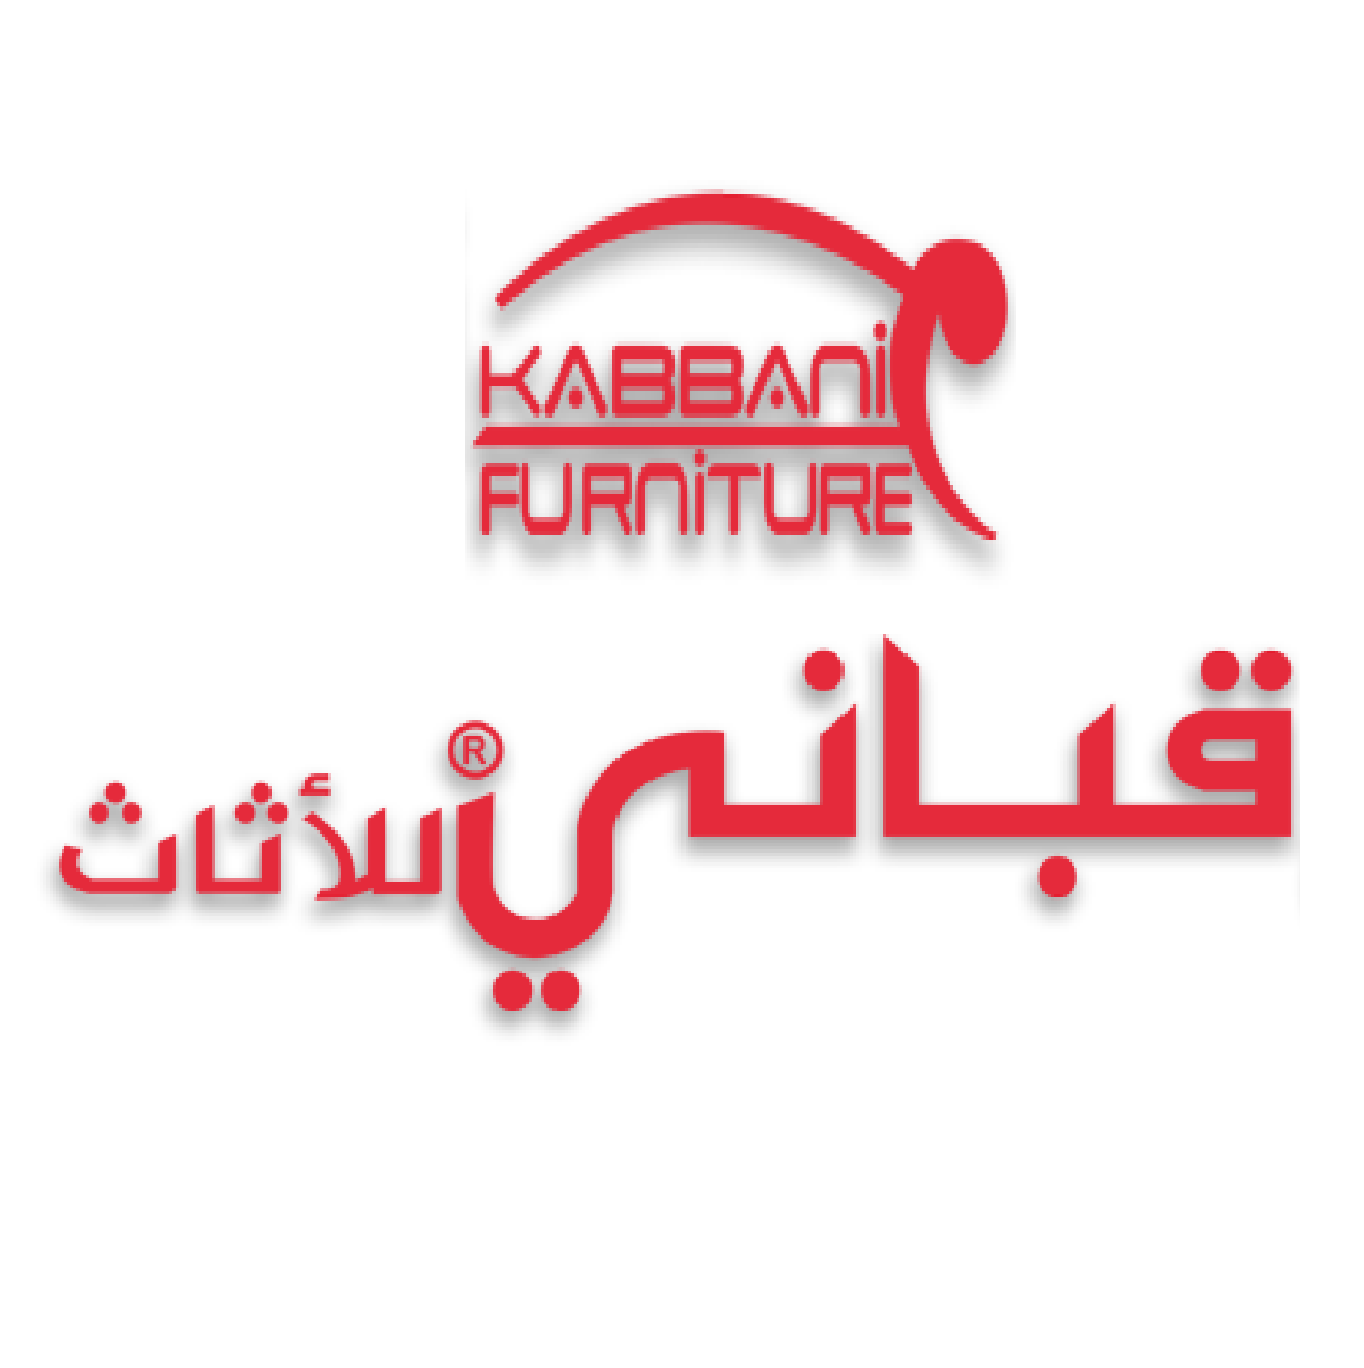 A well-known Kabbani Furniture company